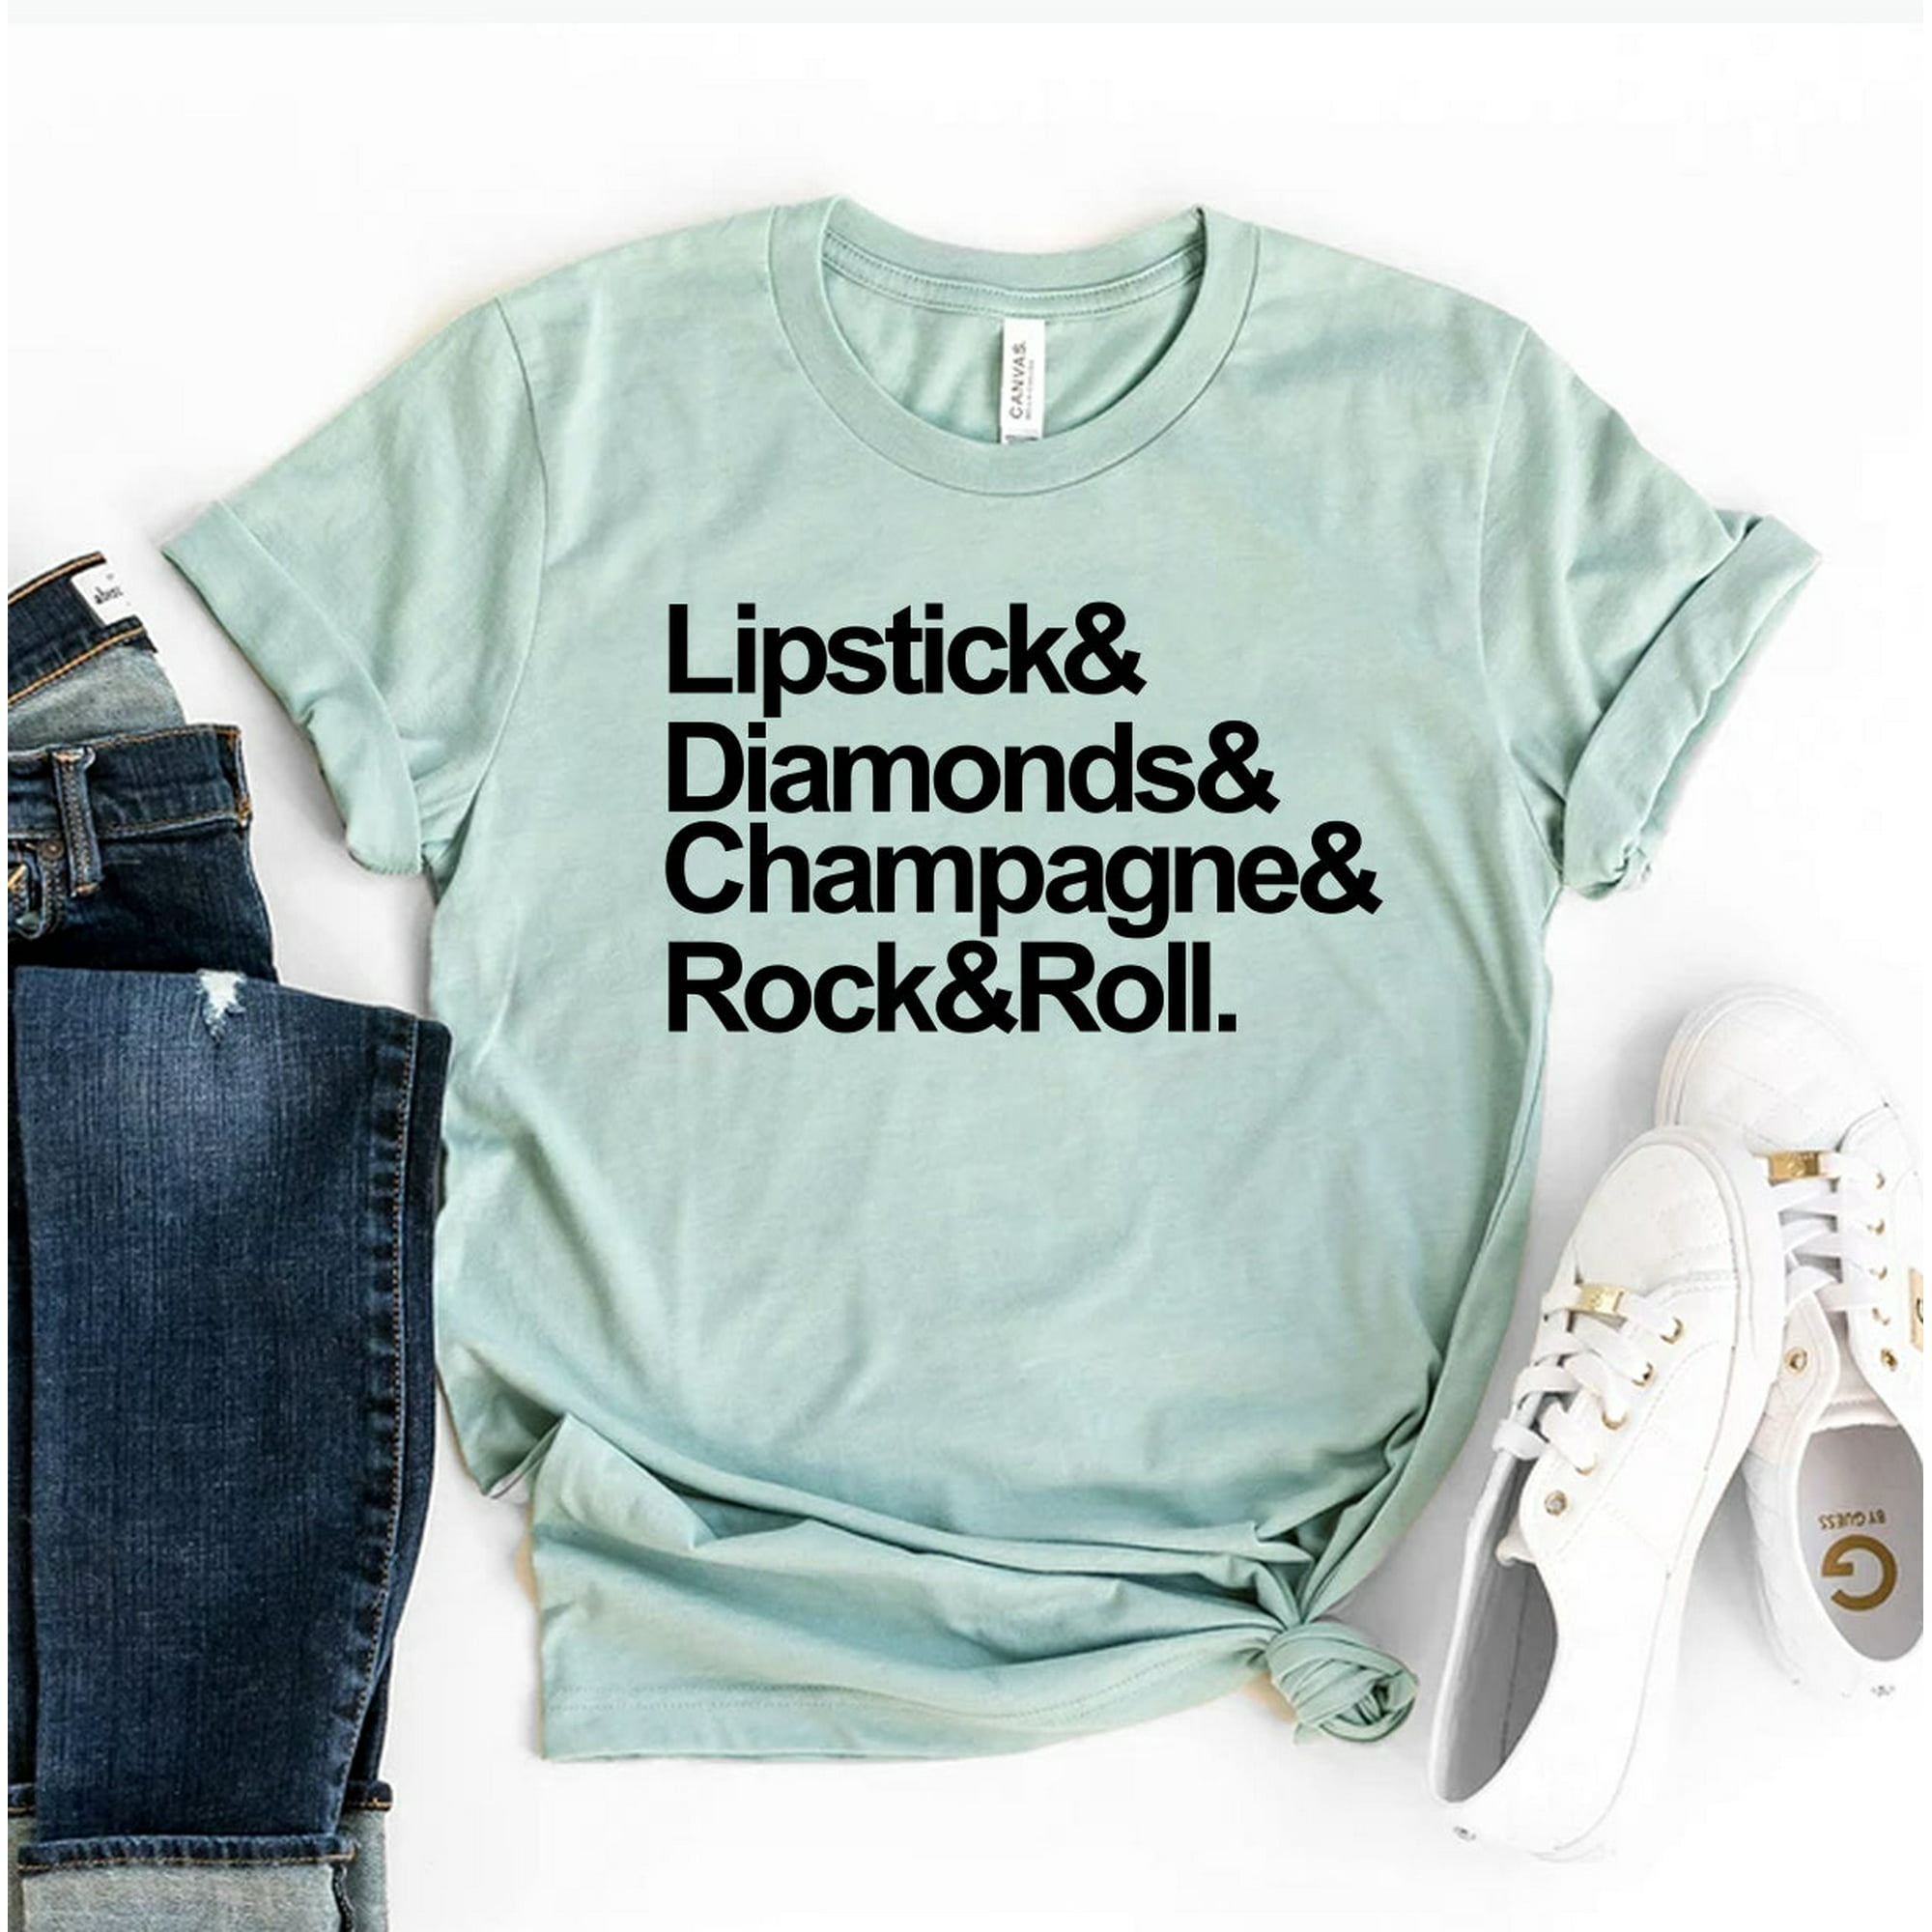 Lipstick Champagne Rock and Roll T-shirt Party Bachelorette Tshirt Women's Weekend Top Country Music Shirt Concert Shirts Walmart.com